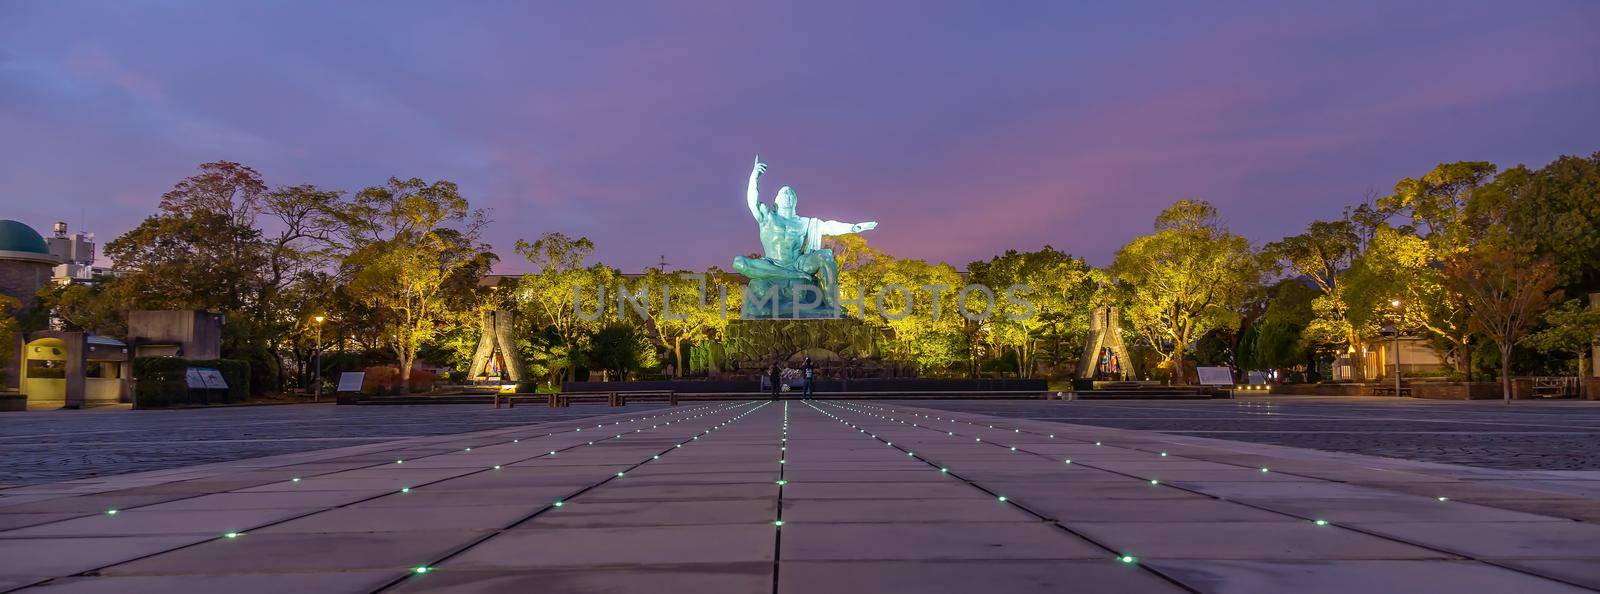 Peace Statue in Nagasaki Peace Park, Nagasaki, Japan by f11photo